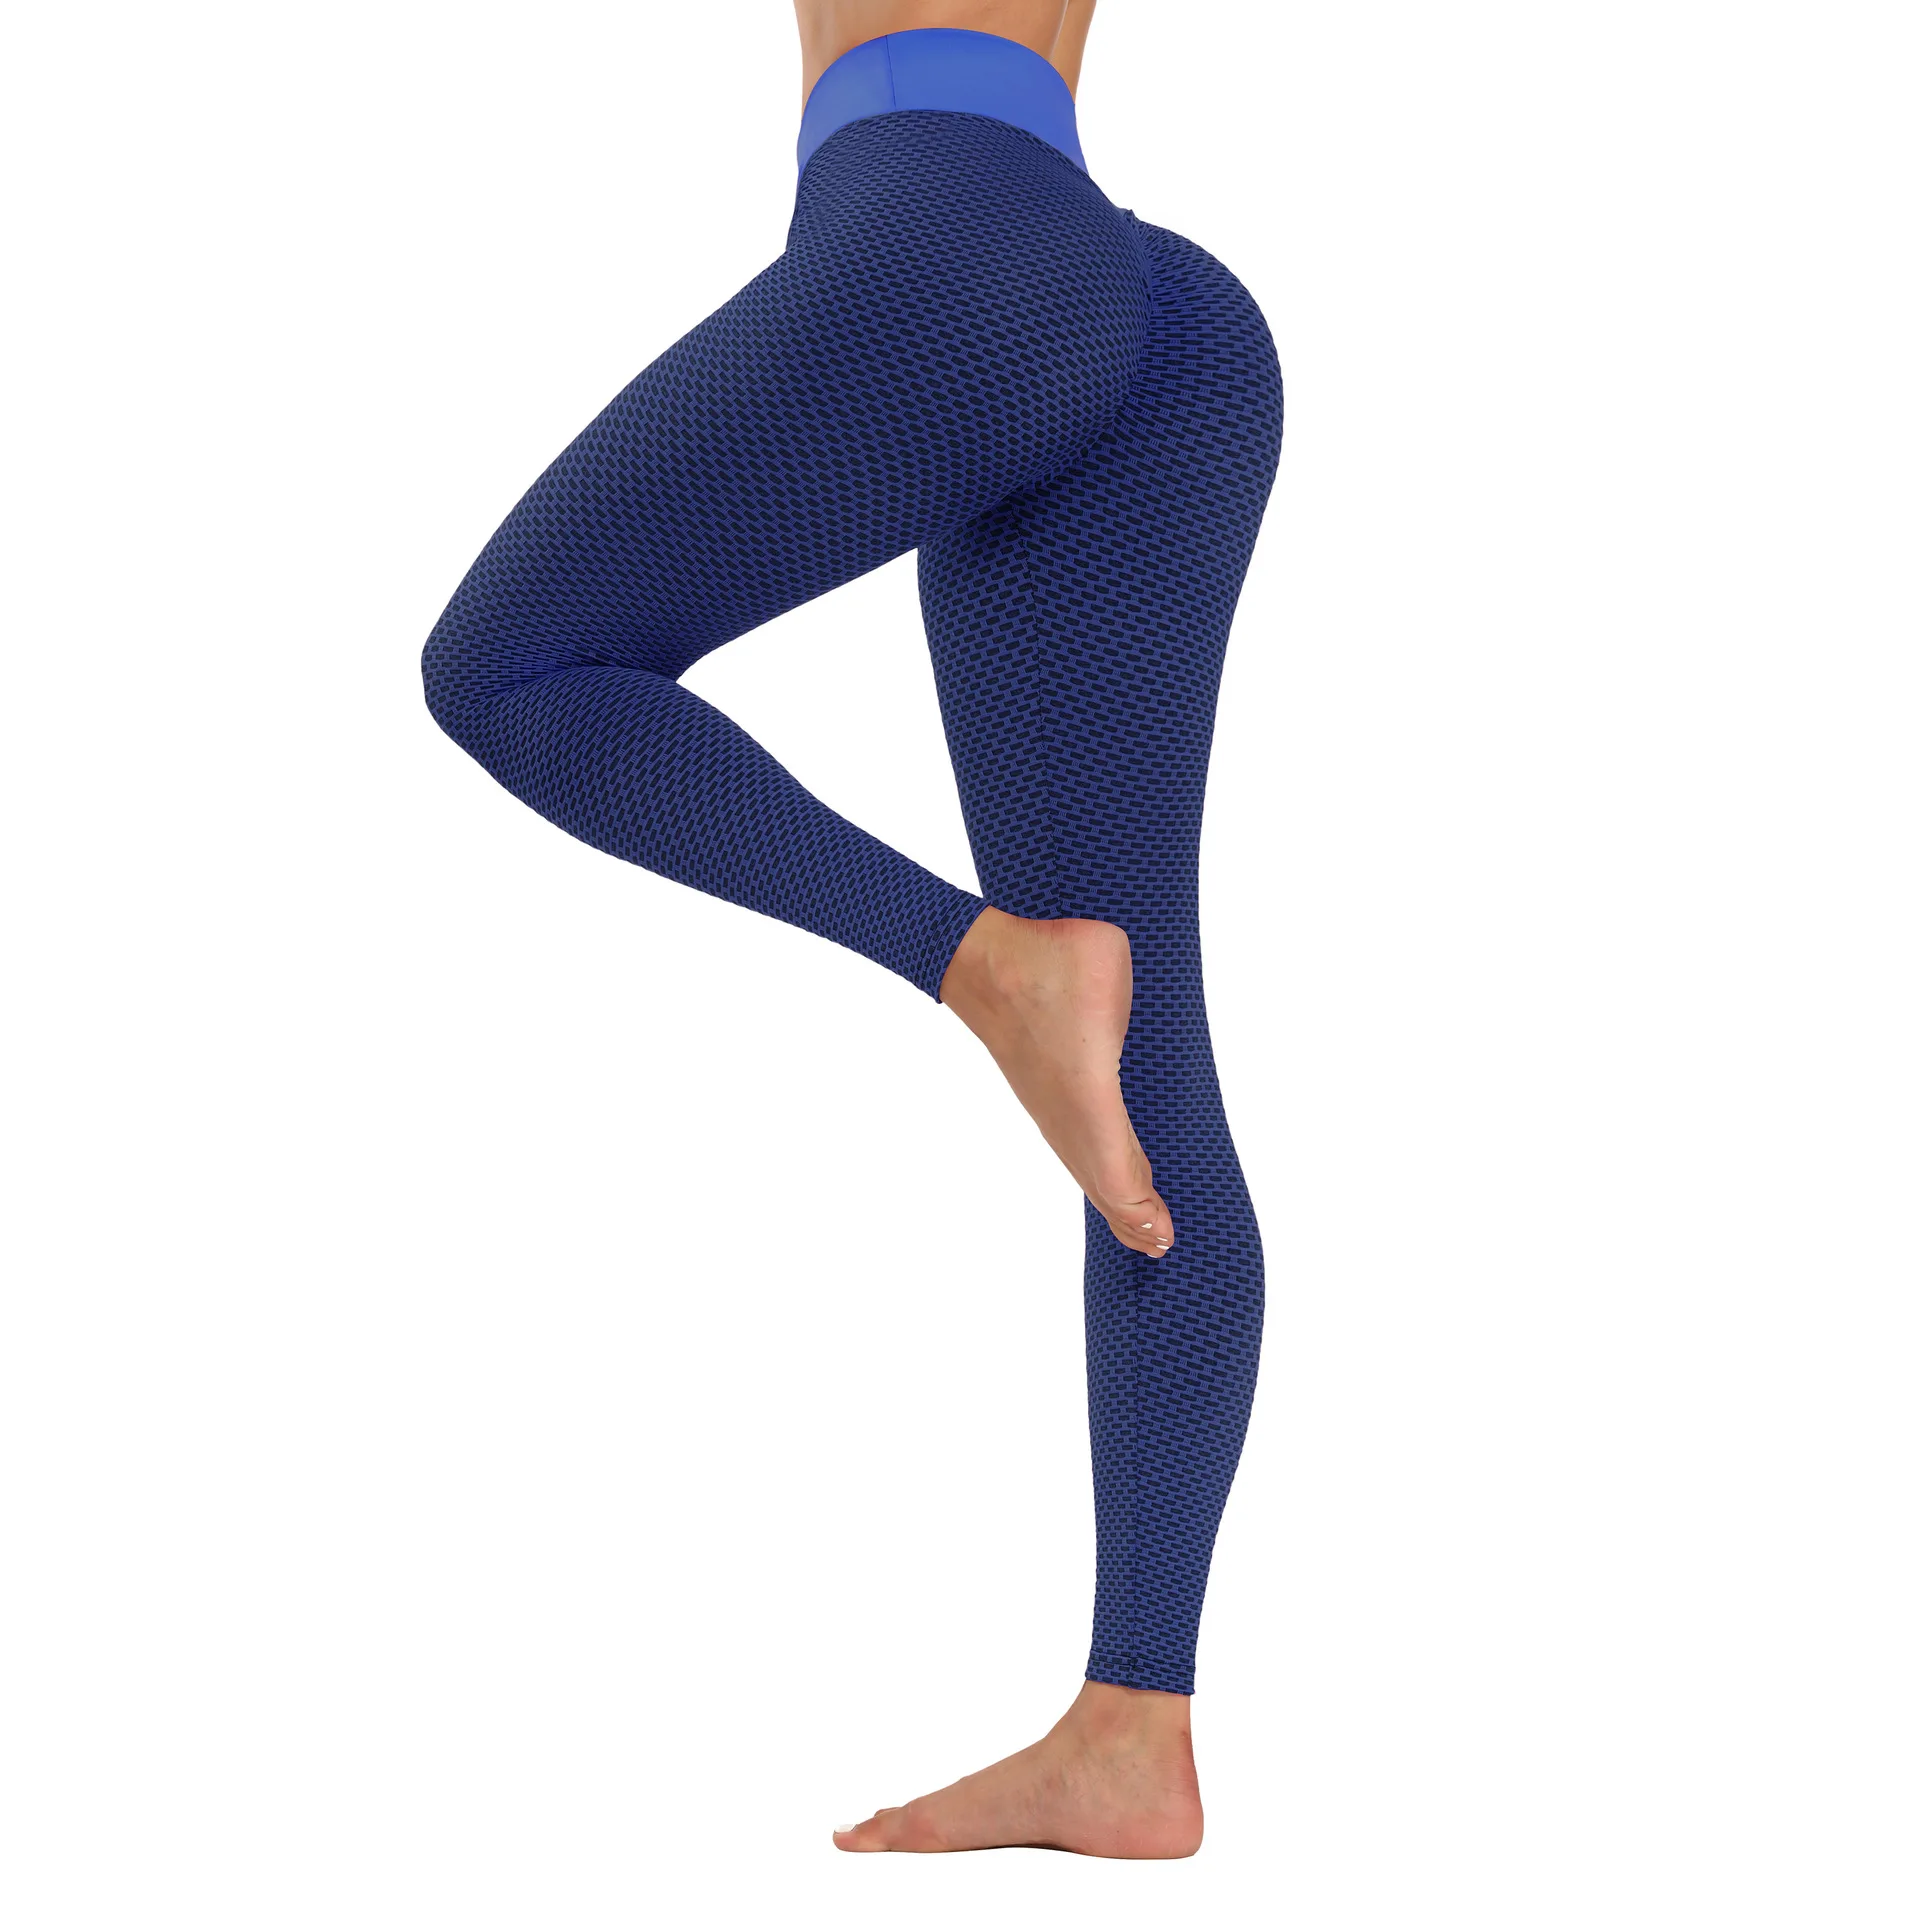 Lulu yoga wear women sports thick fabric peach hip high waist fitness pants jacquard bubble yoga pants